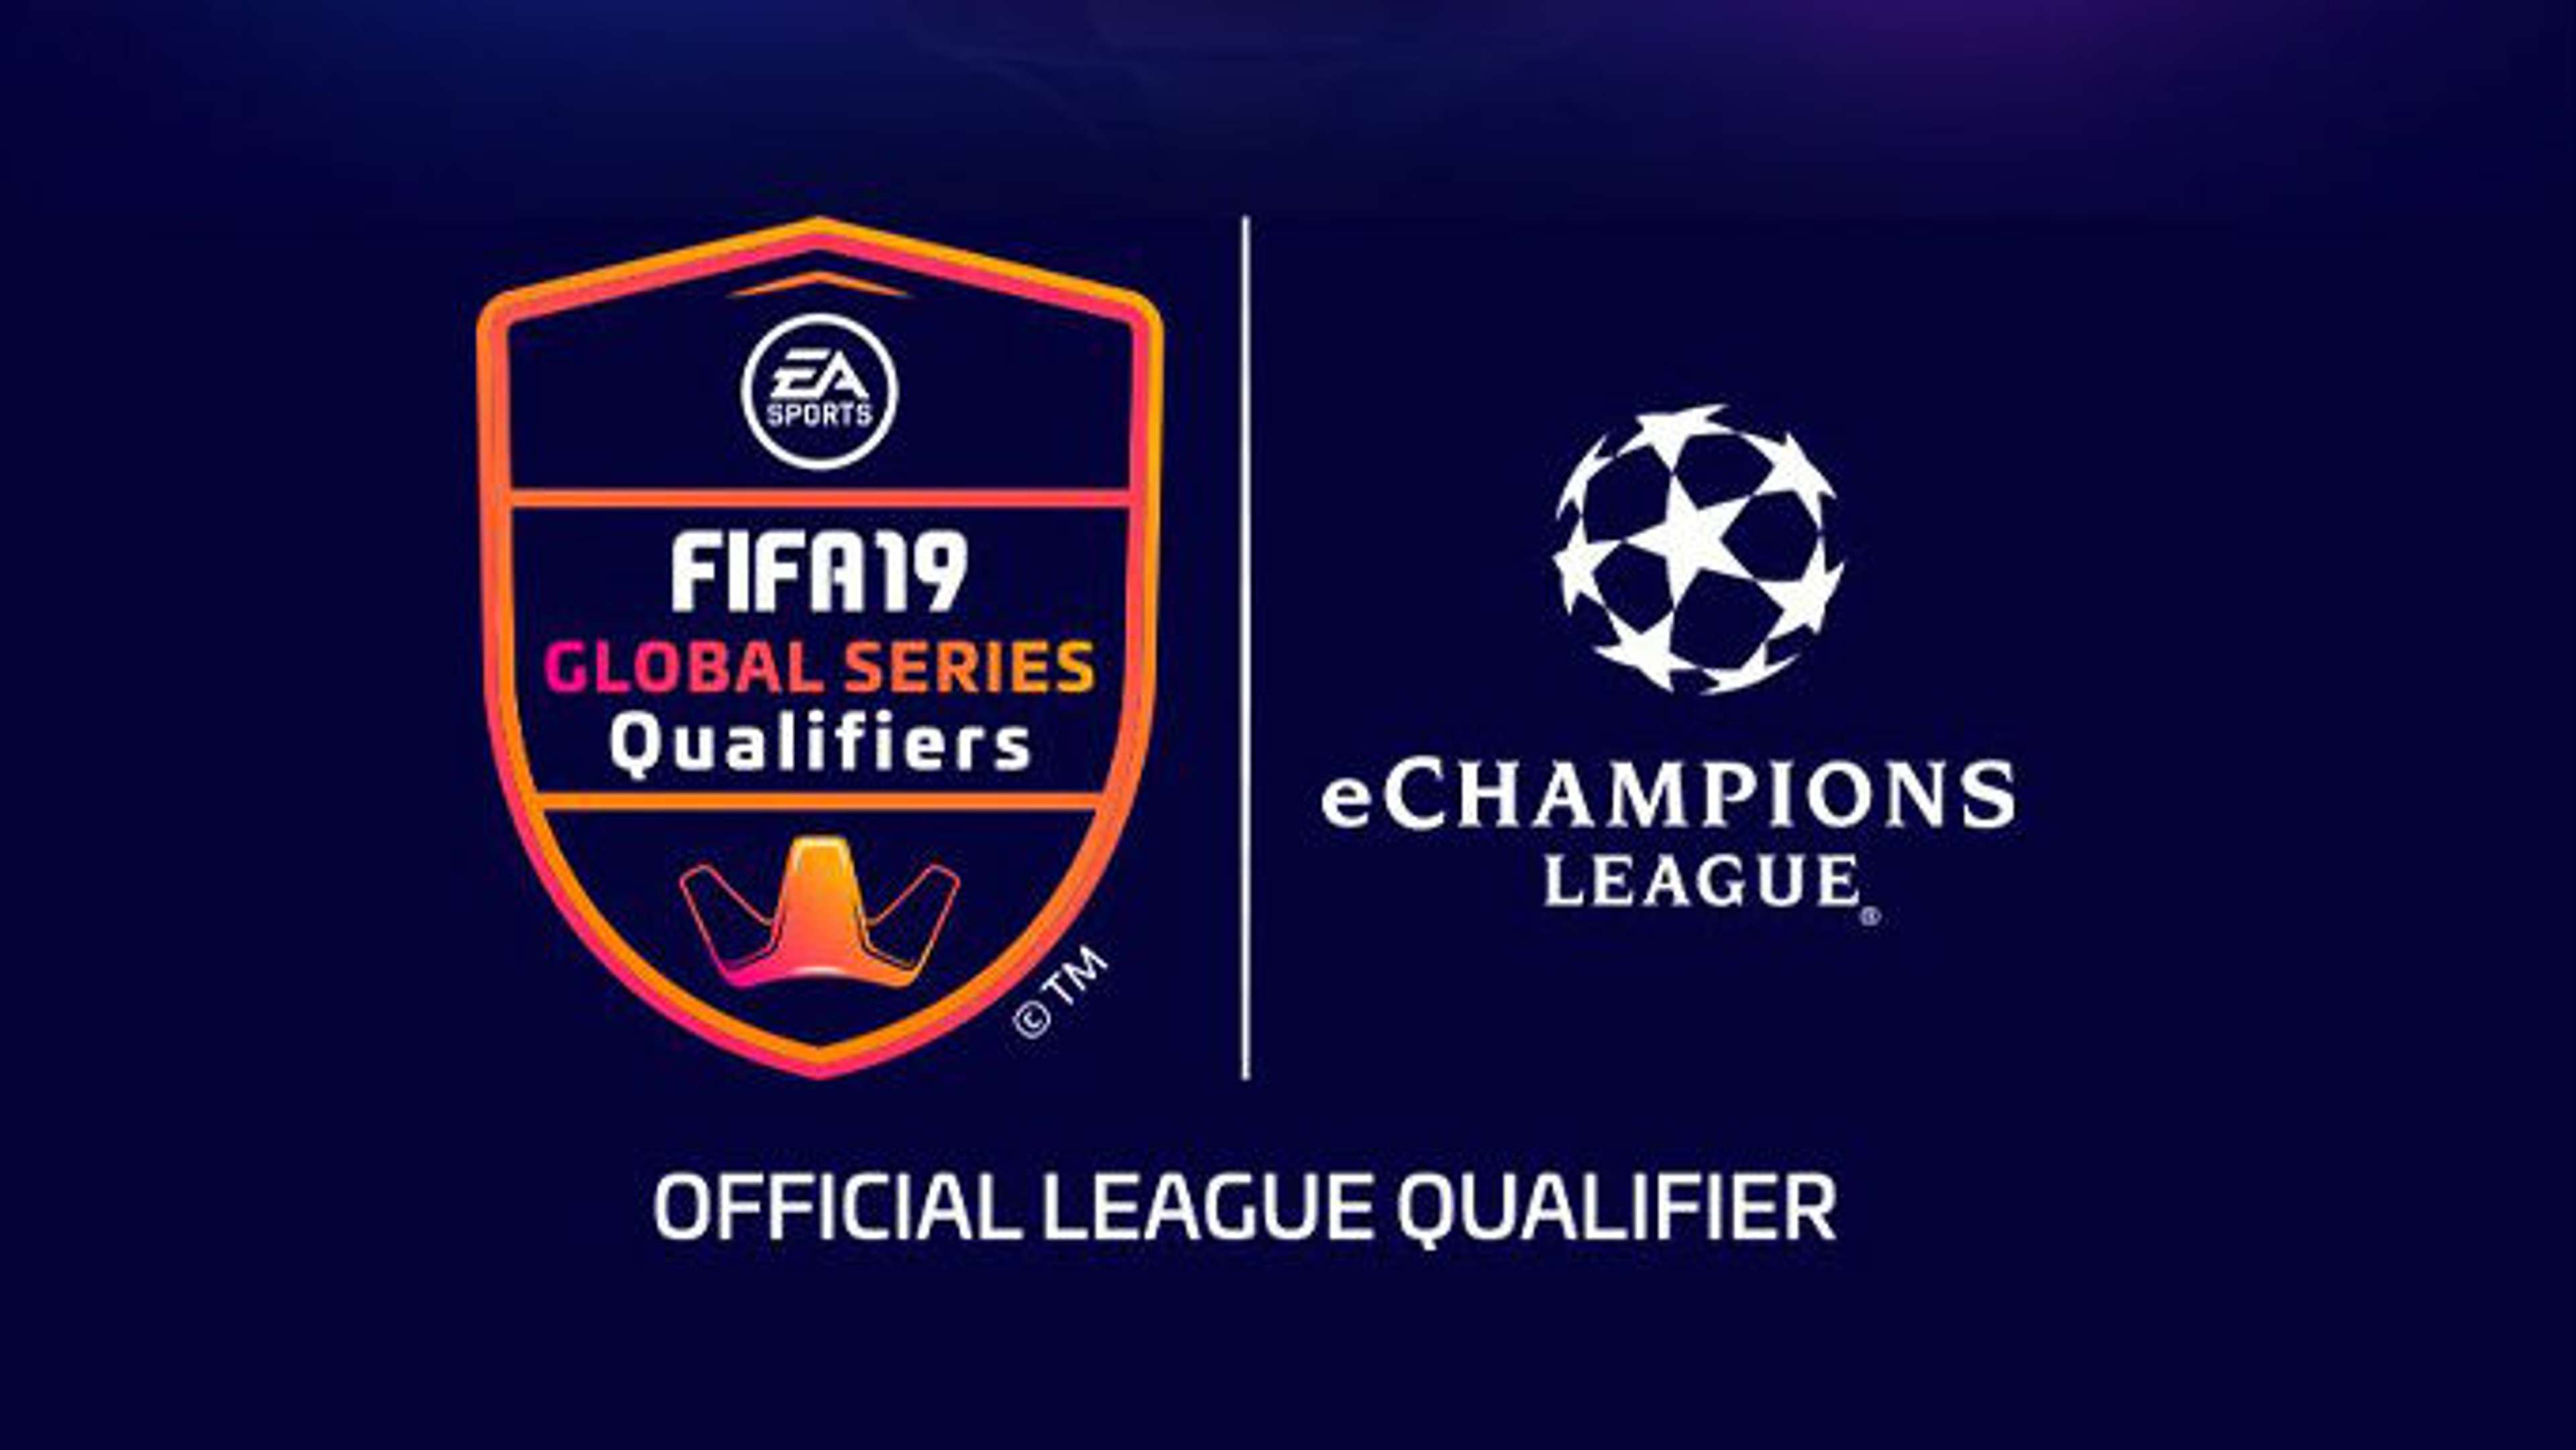 eChampions League EA Sports FIFA 19